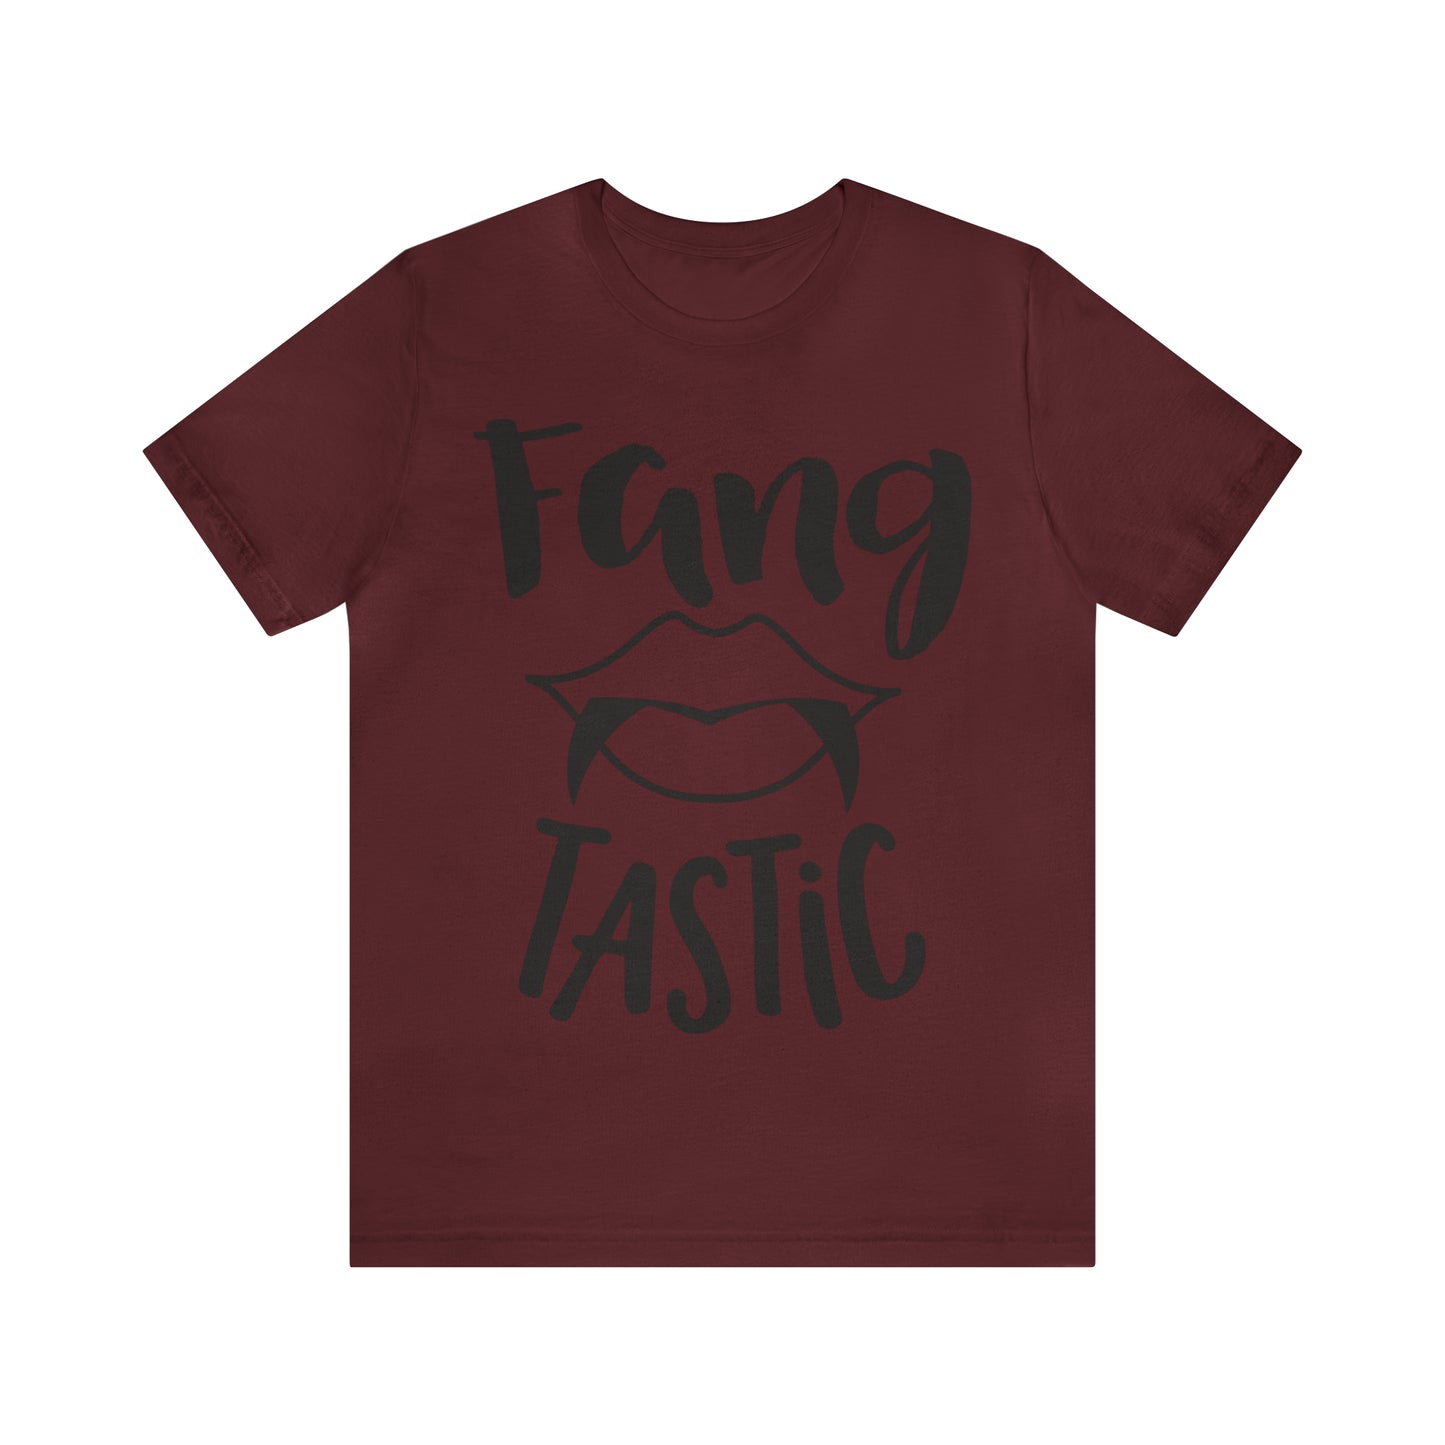 Fang Tastic - Unisex T-Shirt